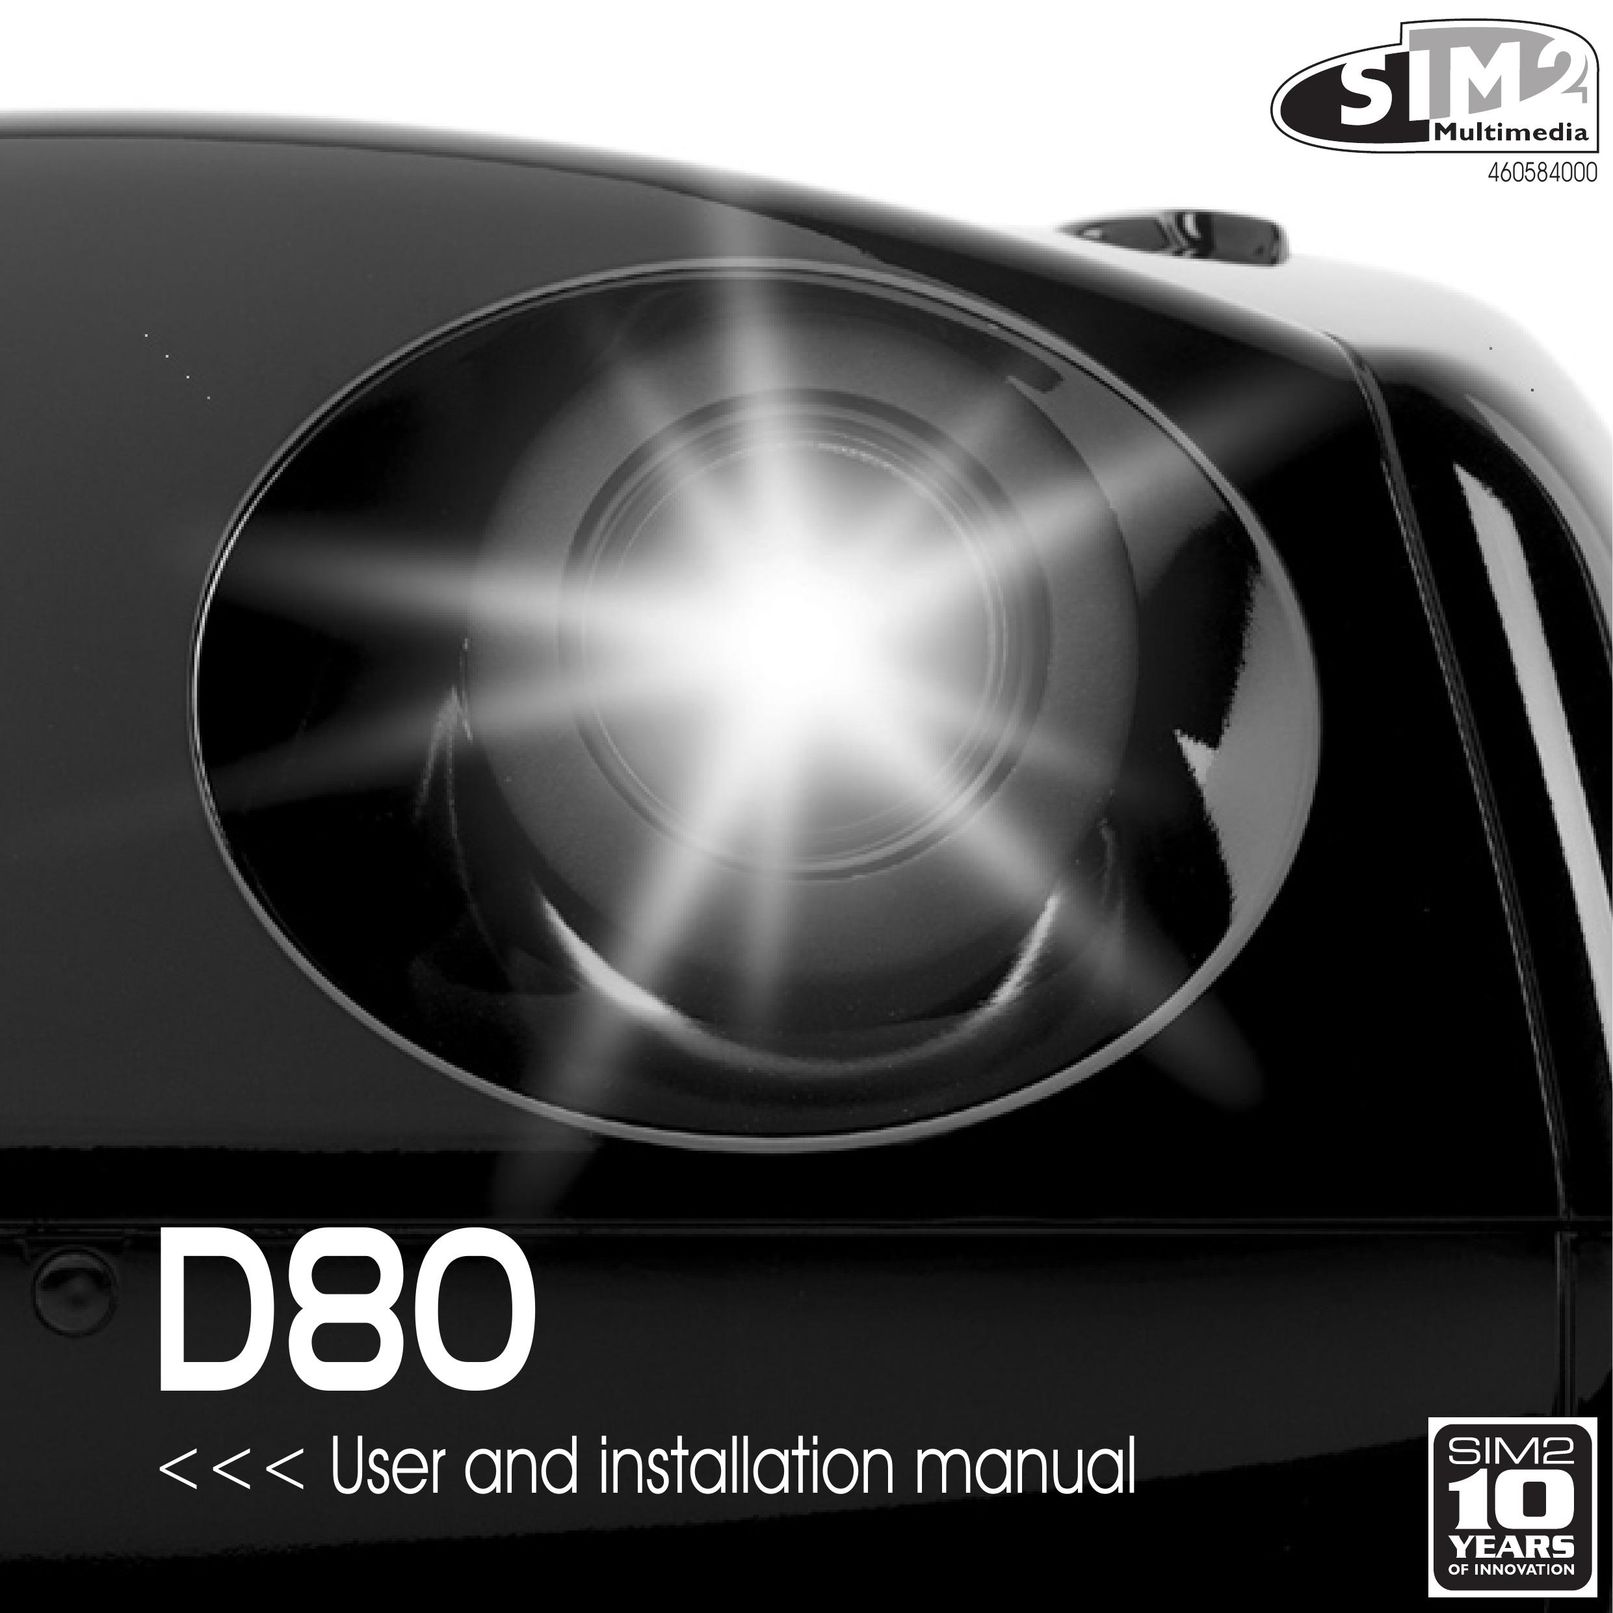 Sim2 Multimedia D80 Projector User Manual